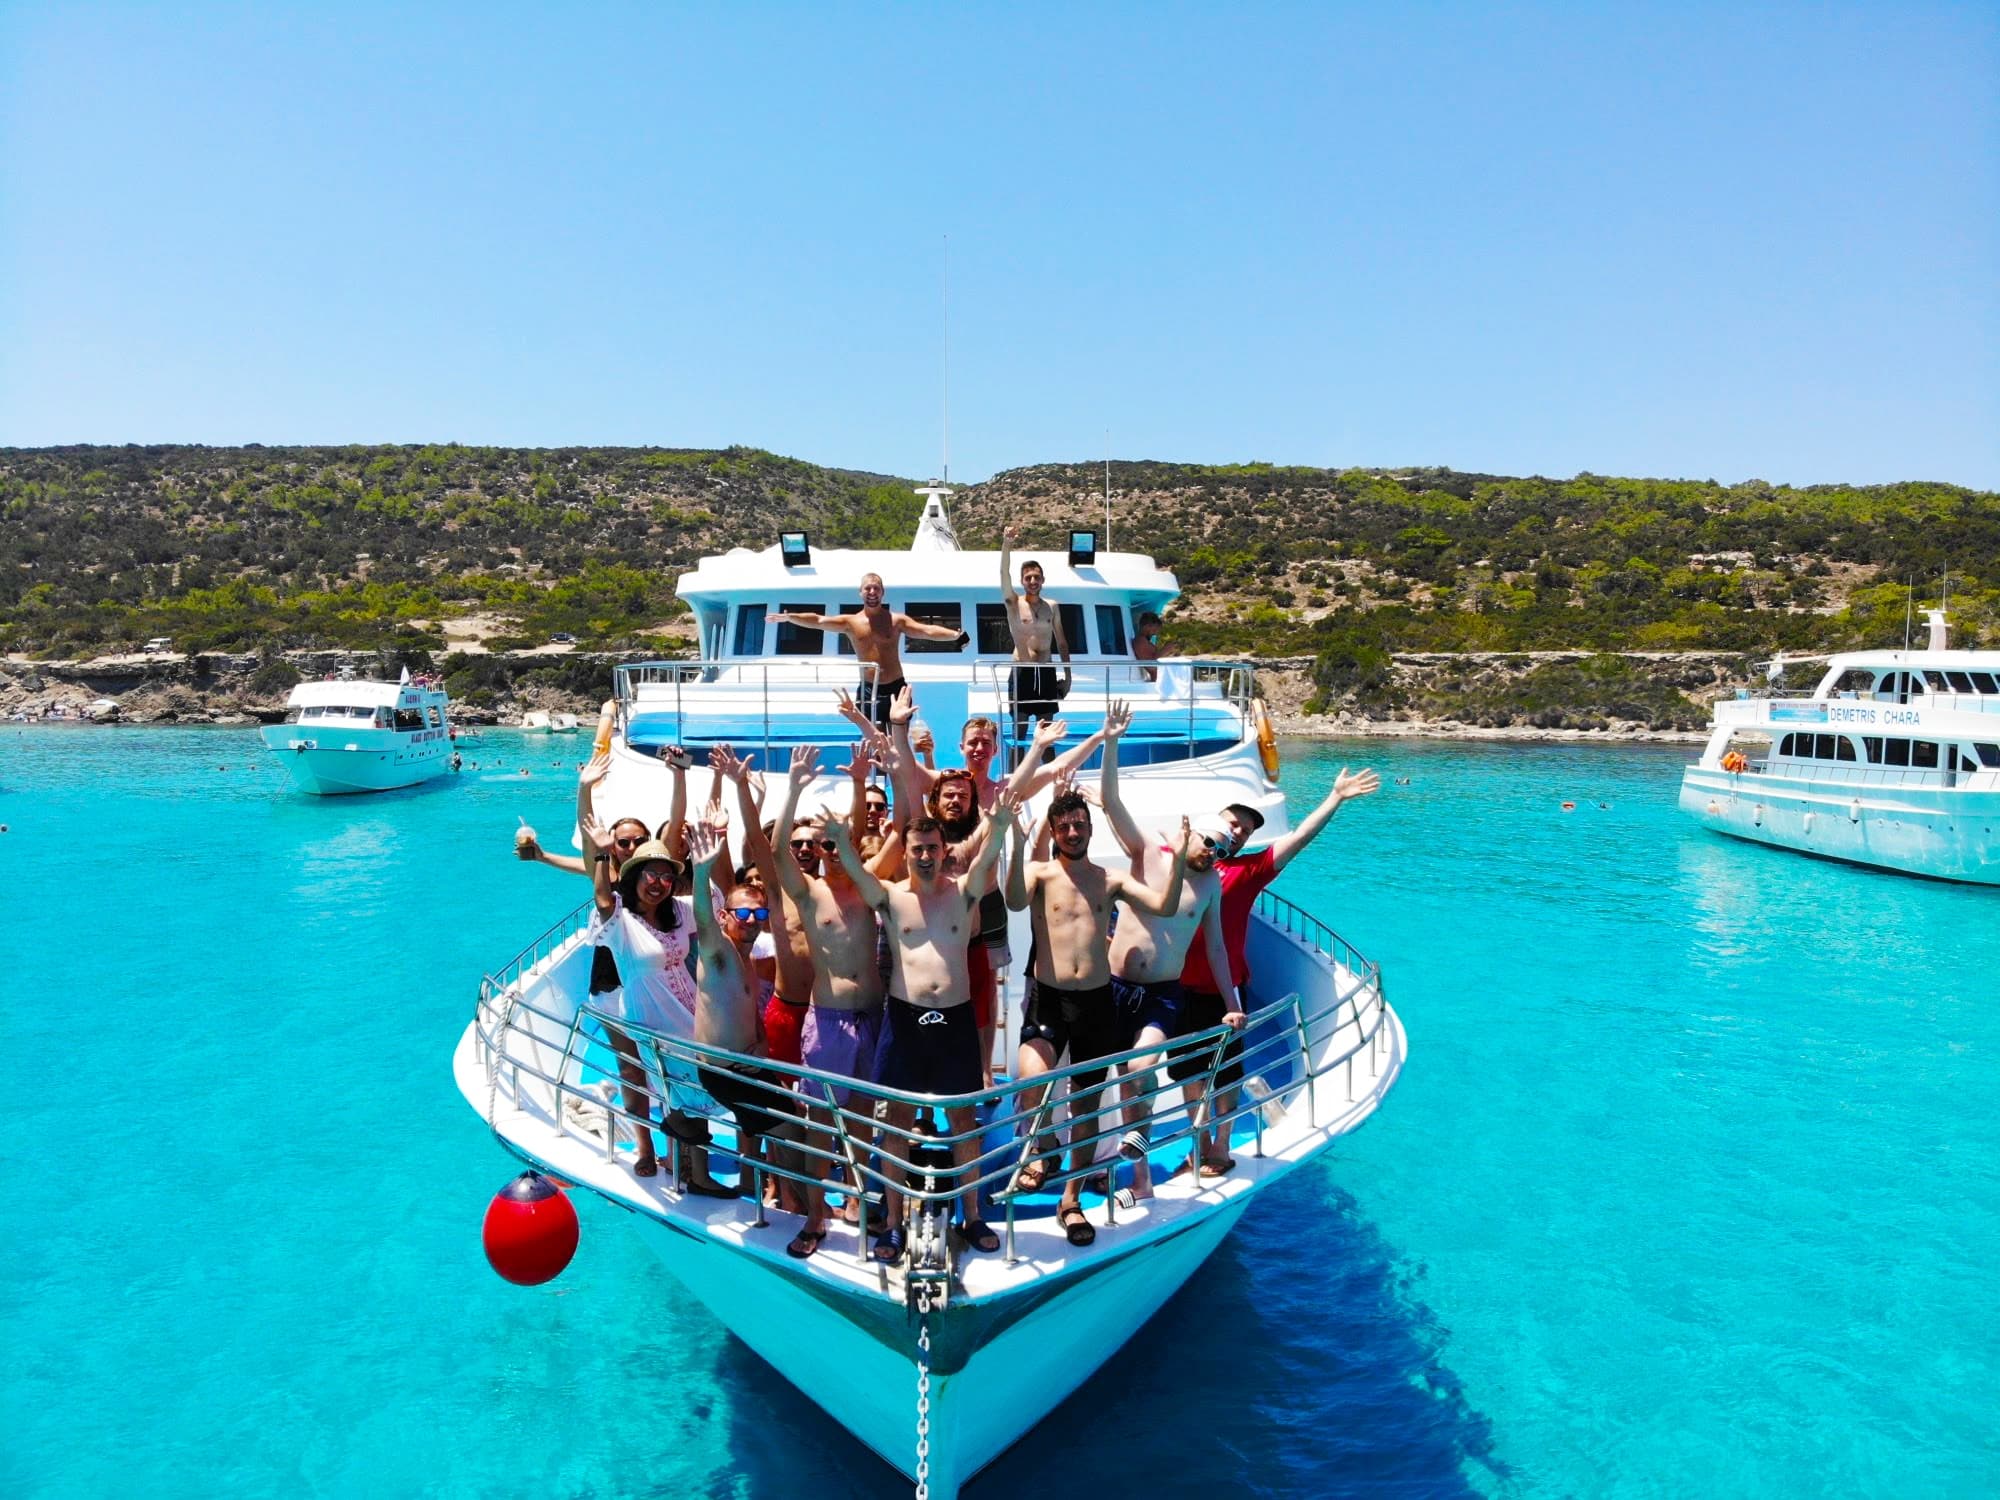 financer boat trip at blue lagoon cyprus